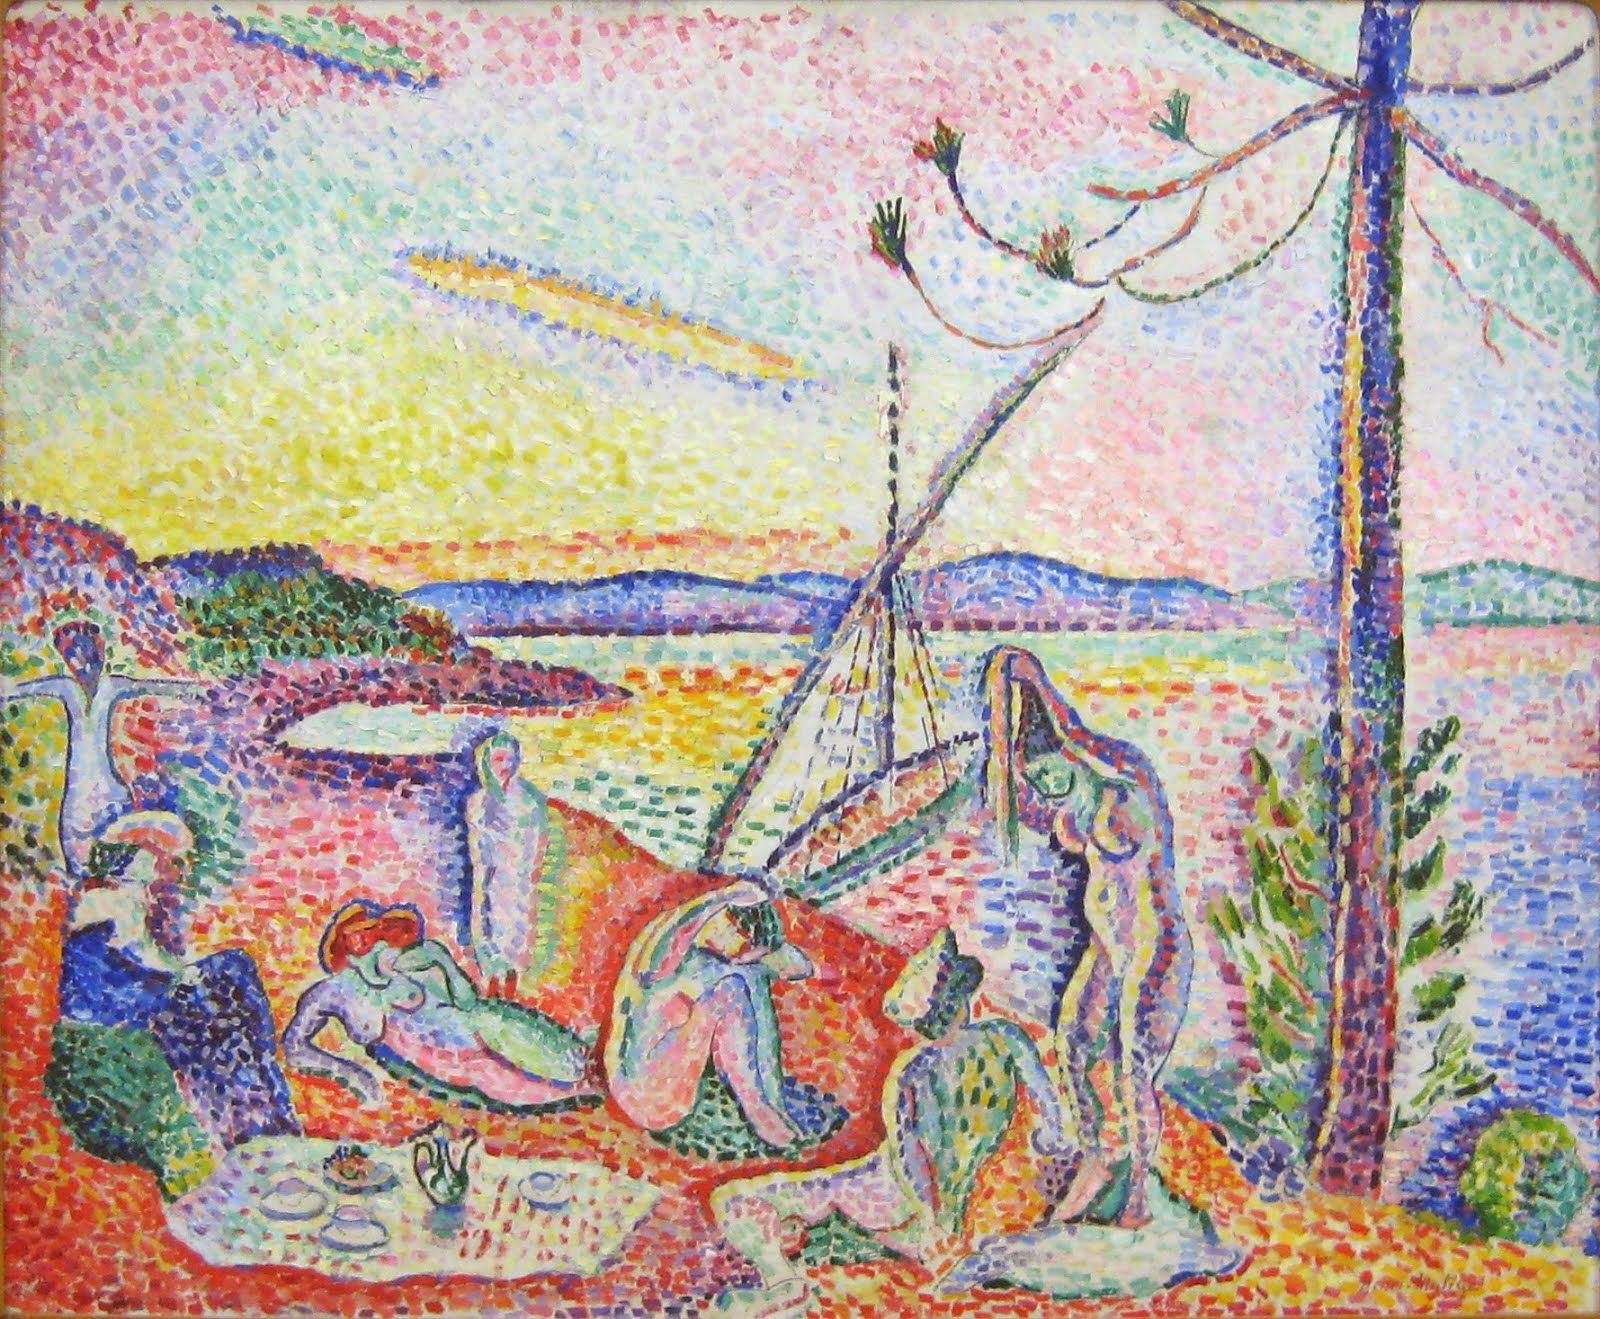 "Le peintre Henri-Matisse"